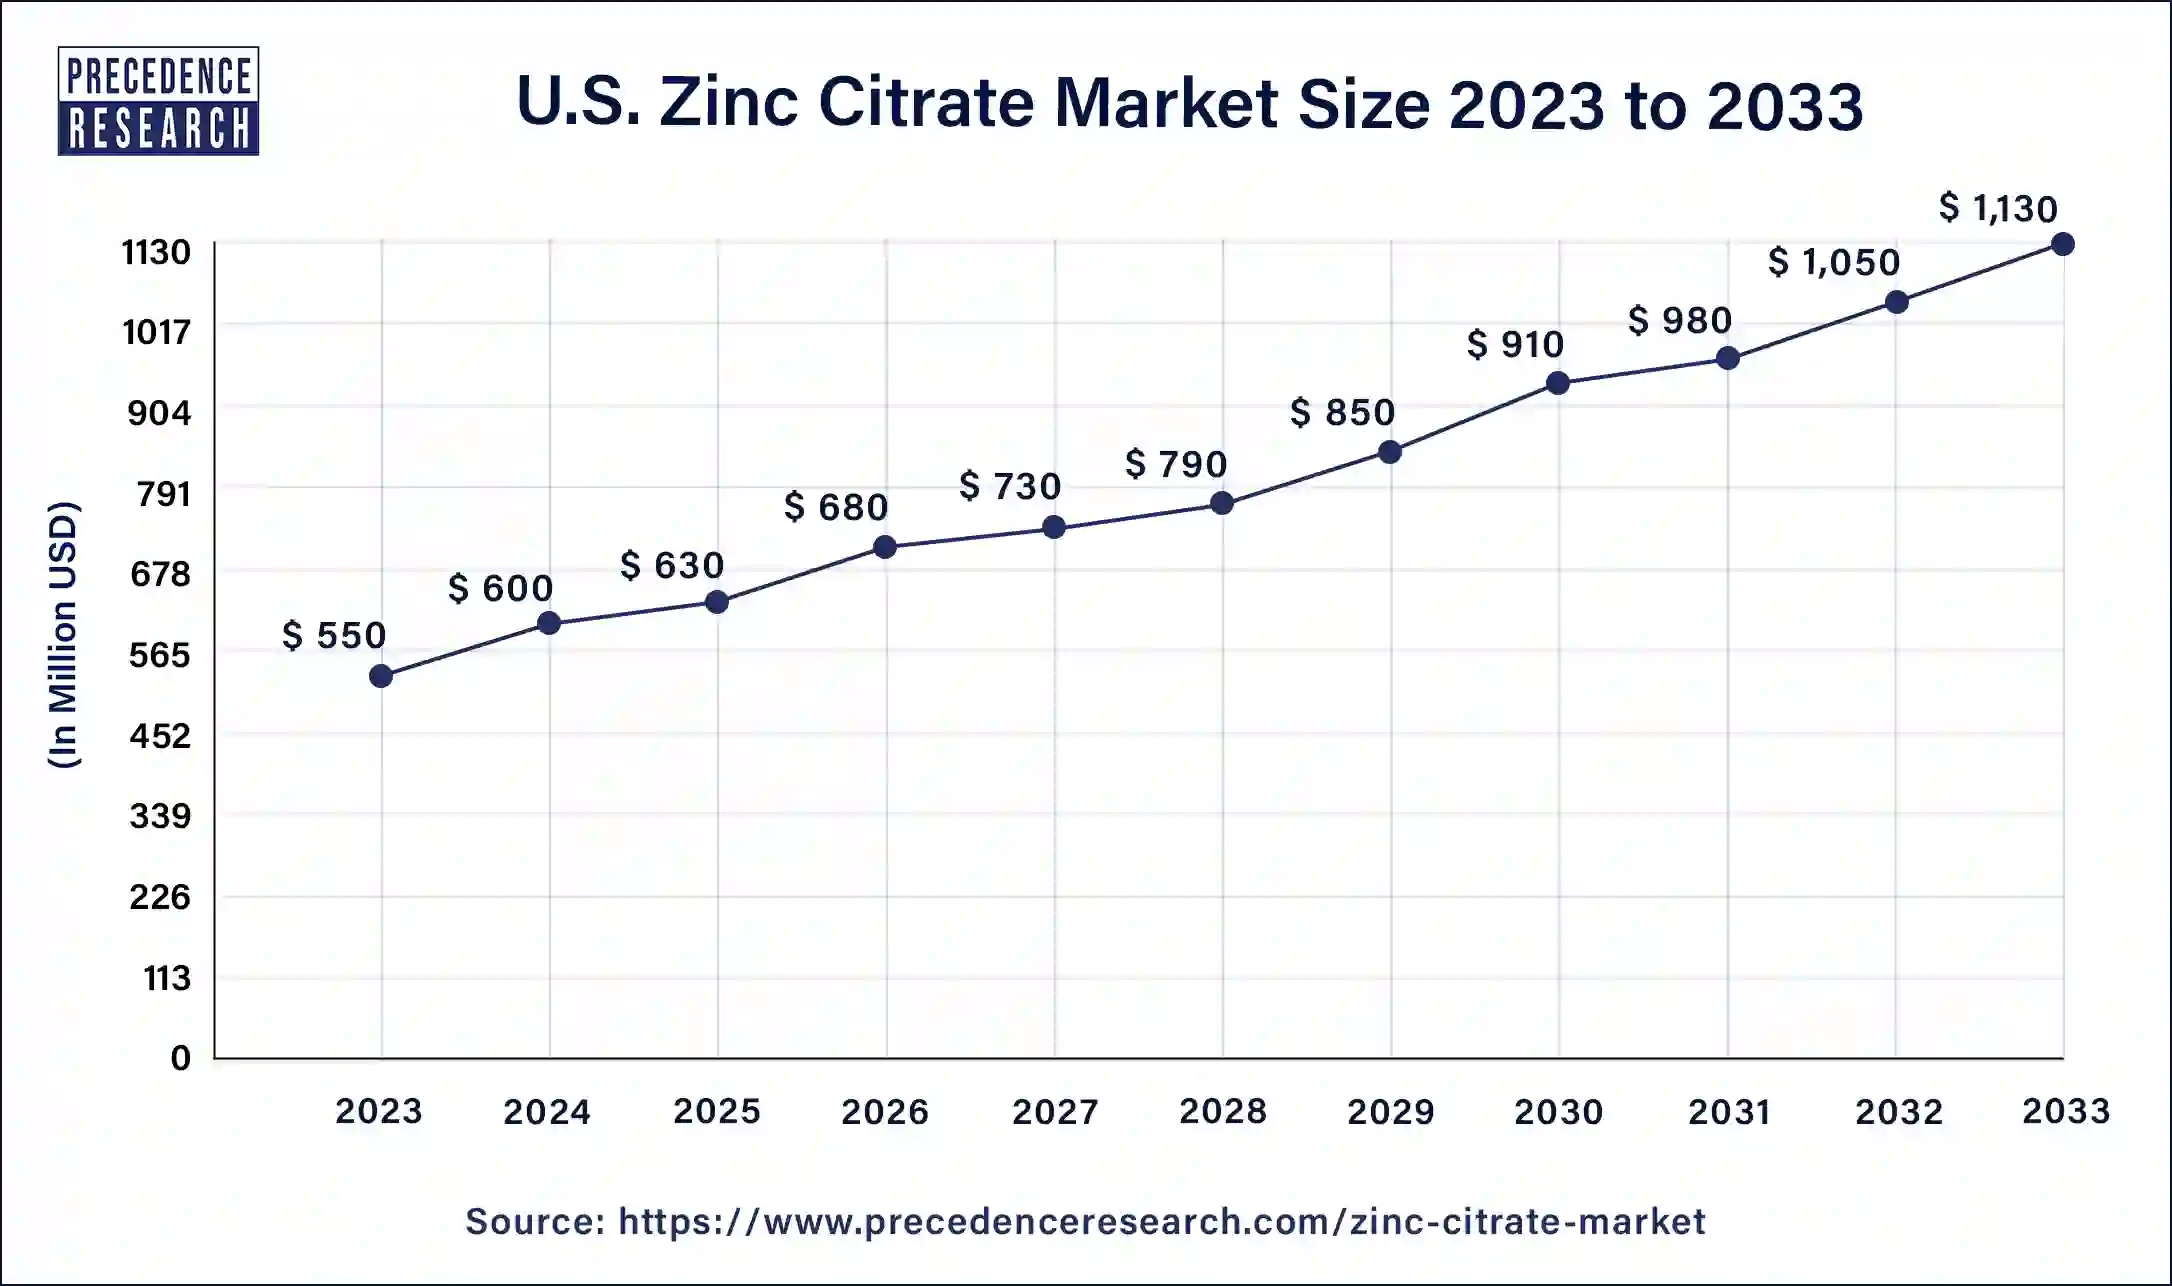 U.S. Zinc Citrate Market Size 2024 to 2033